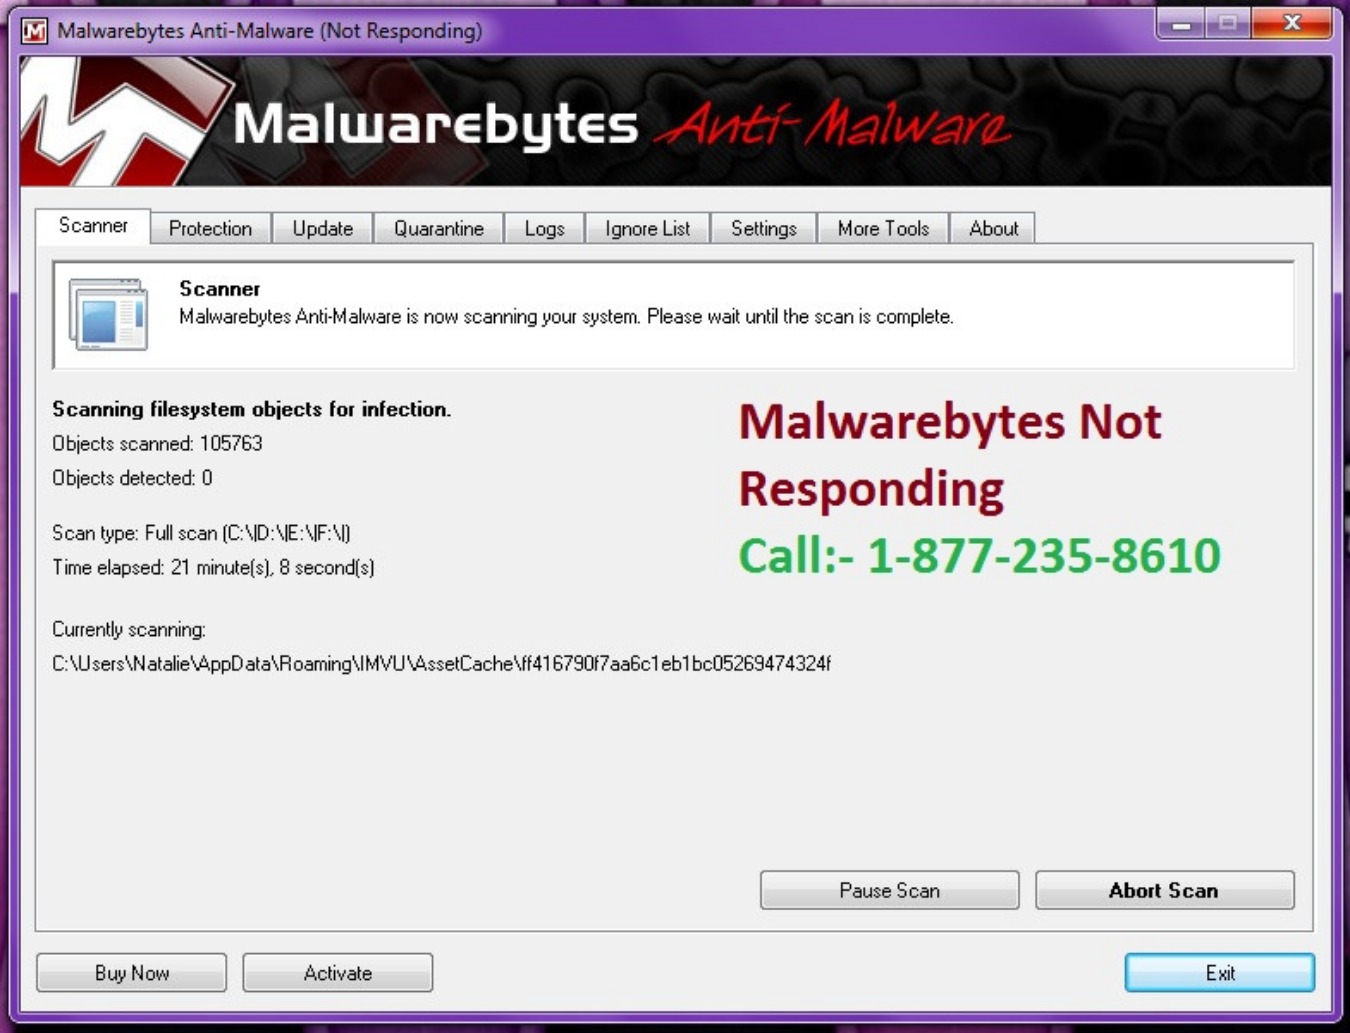 is free upgrade of malwarebytes legitimate